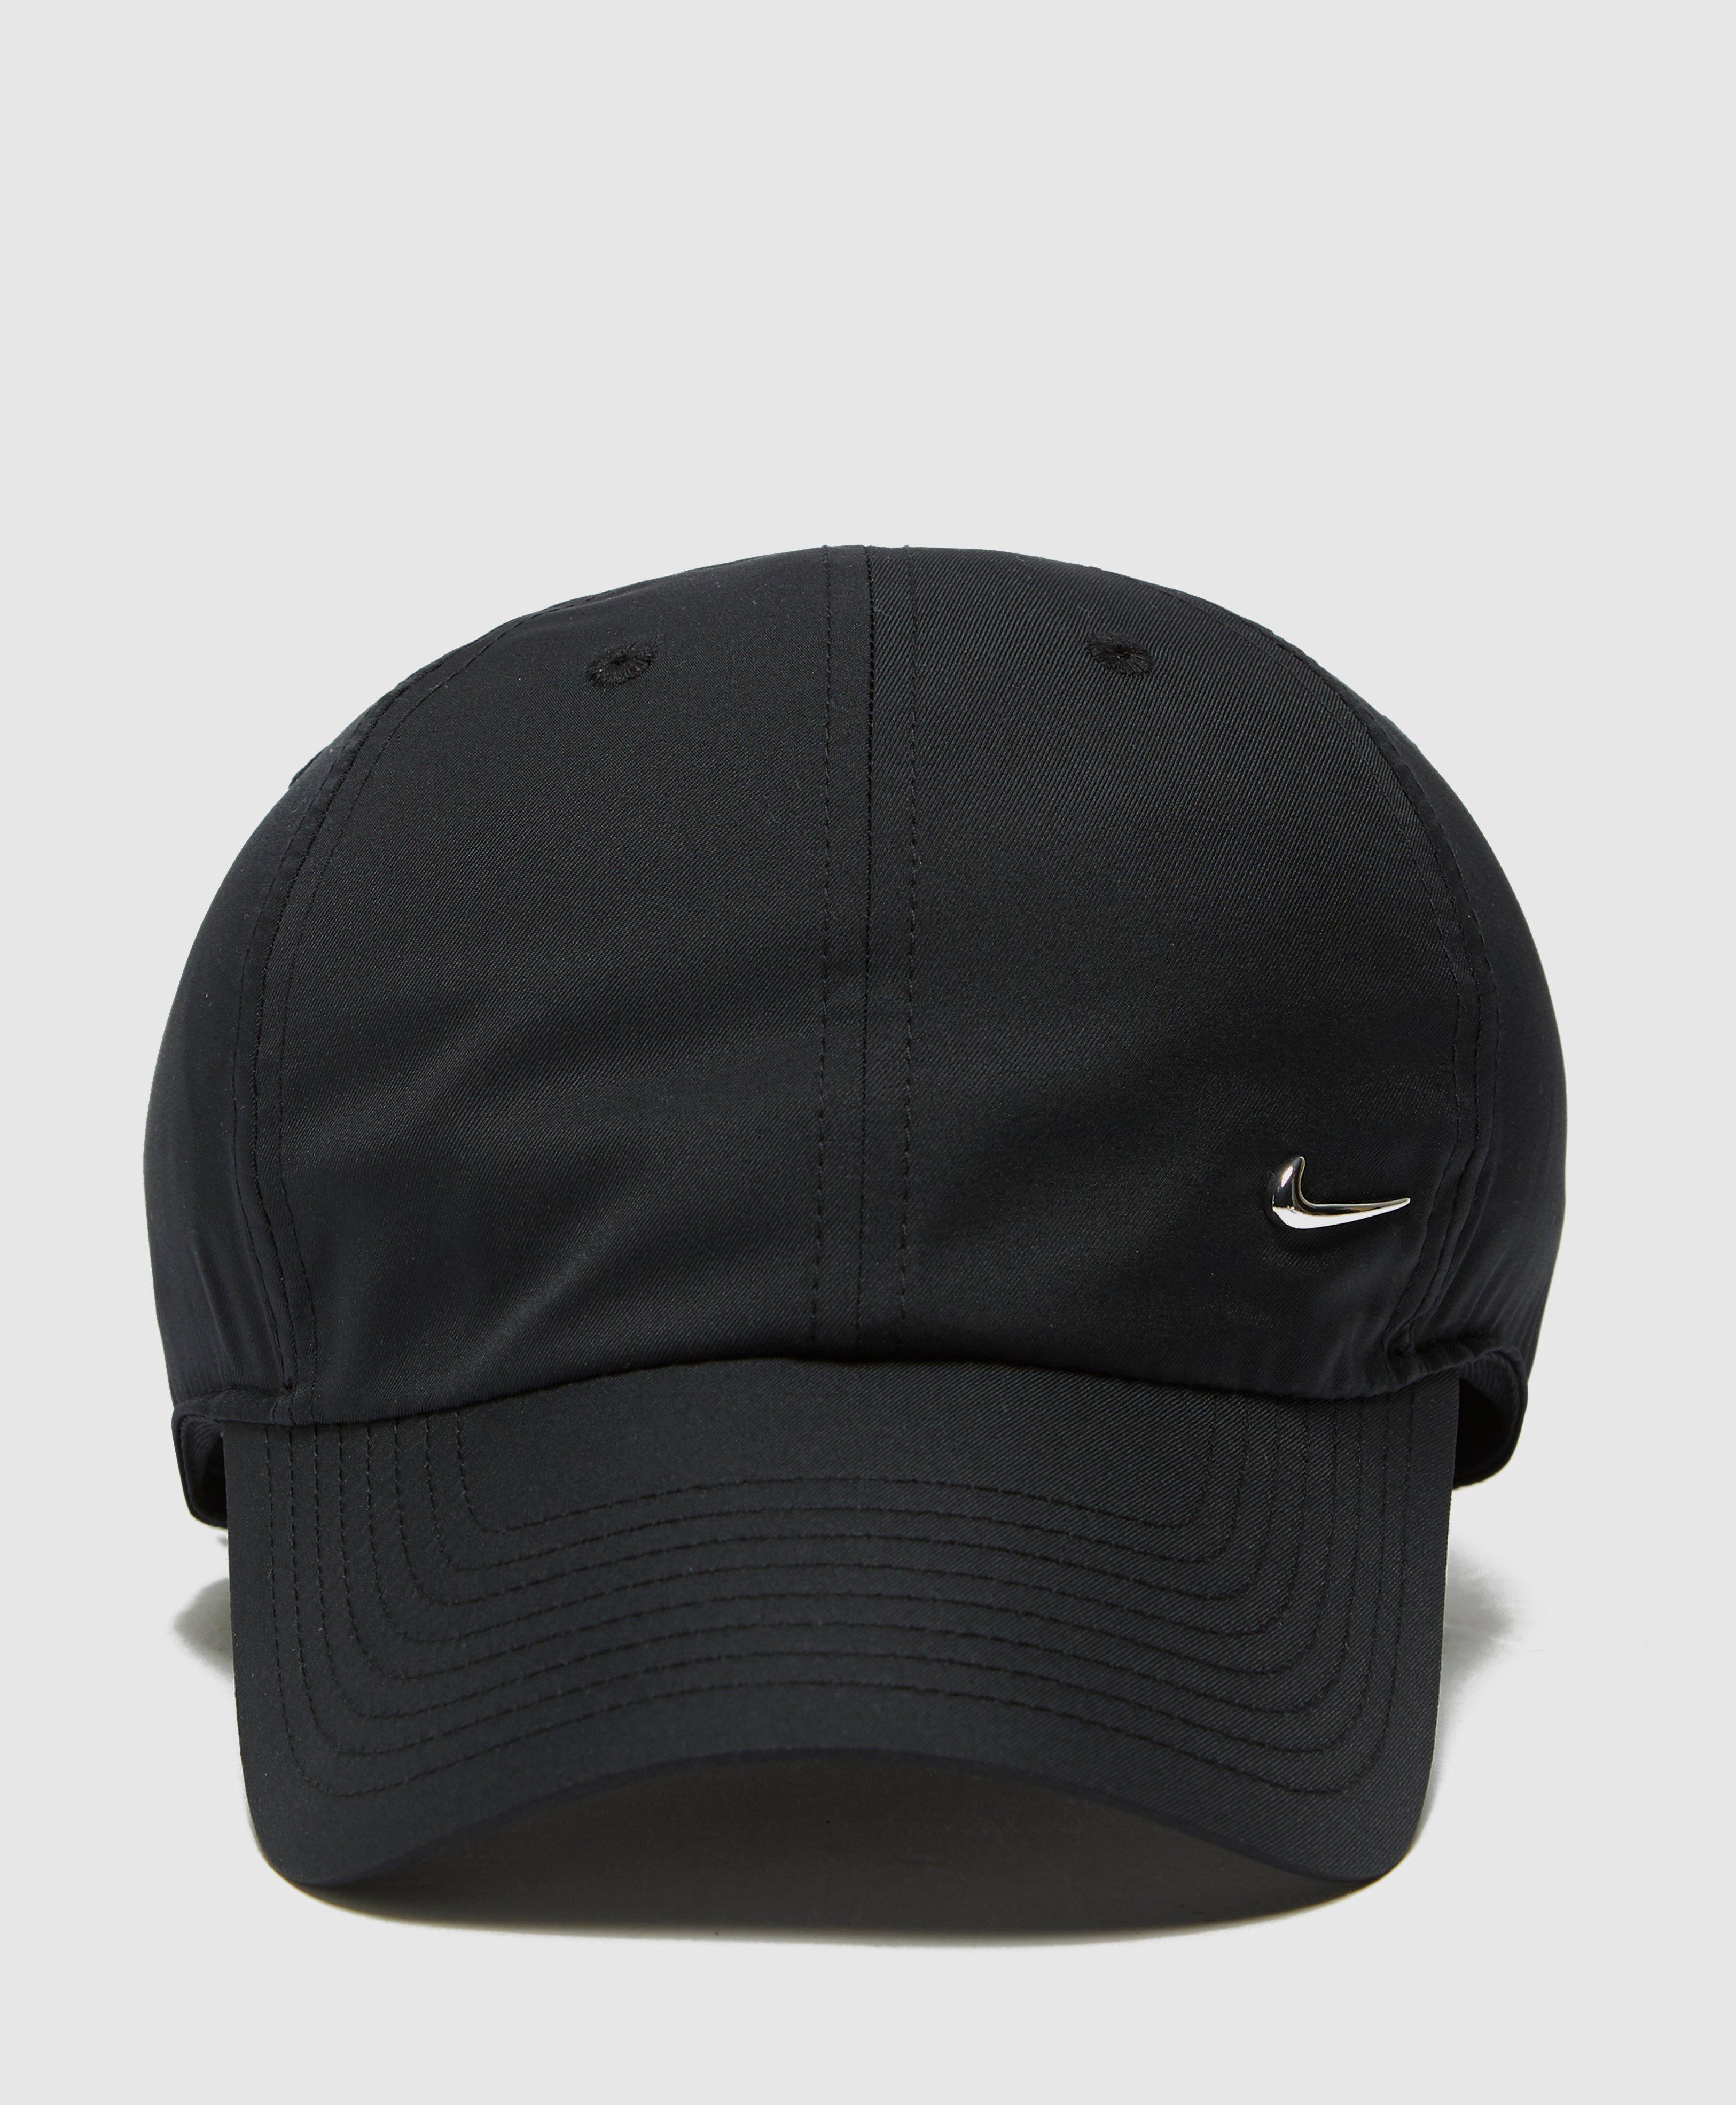 Nike Synthetic Metal Swoosh Cap in Black for Men - Save 56% | Lyst